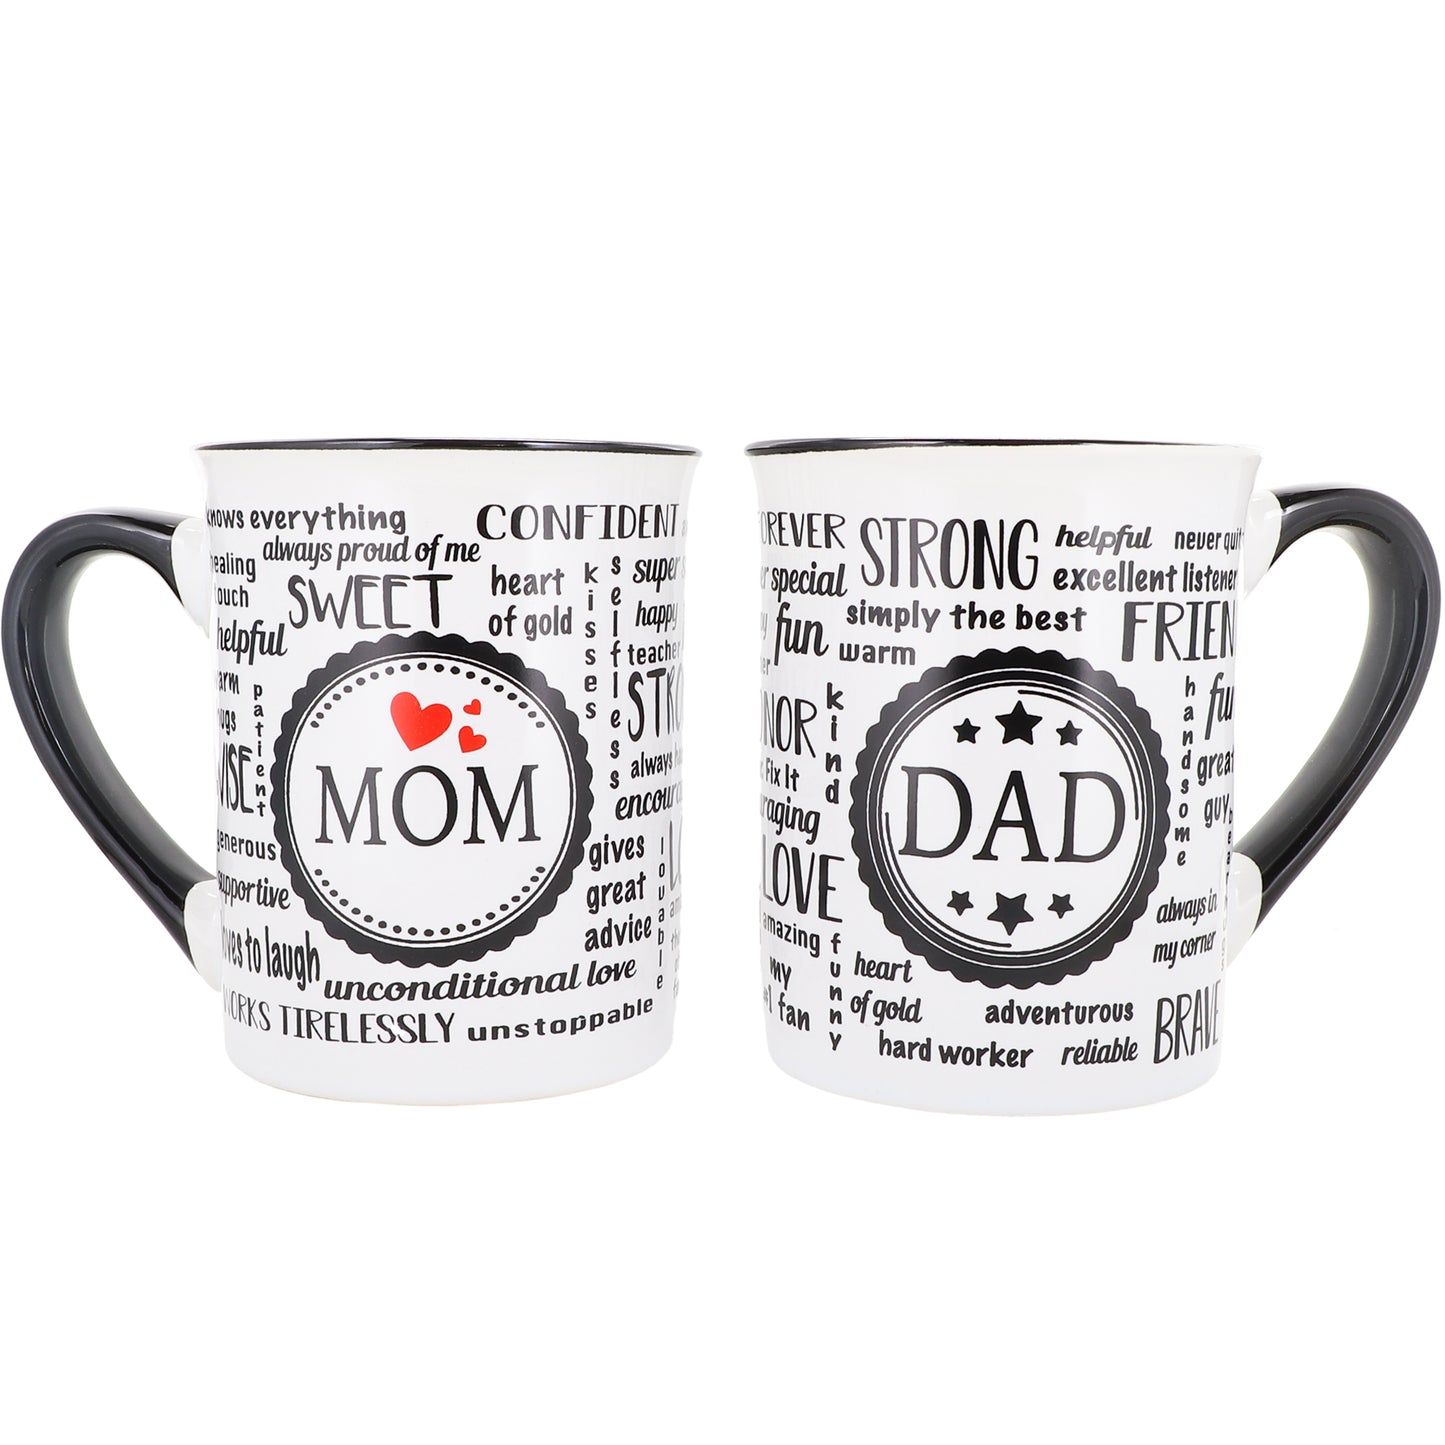 Cottage Creek Mom Dad Mugs, Set of Two 16oz. Ceramic Mom and Dad Coffee Mugs